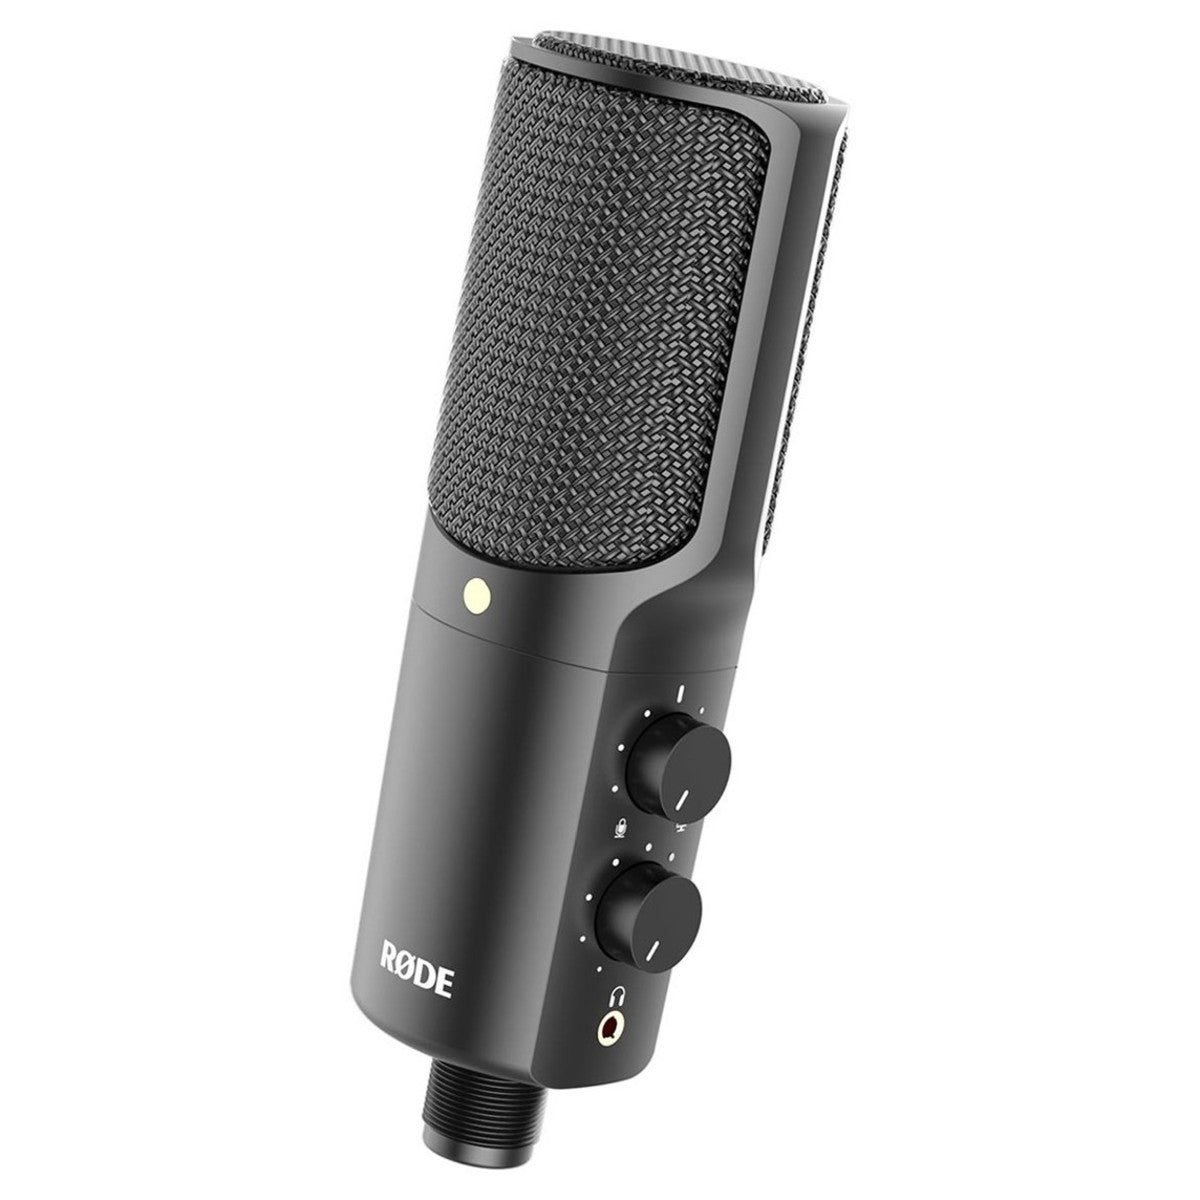 RØDE NT-USB Versatile Studio-Quality USB Microphone